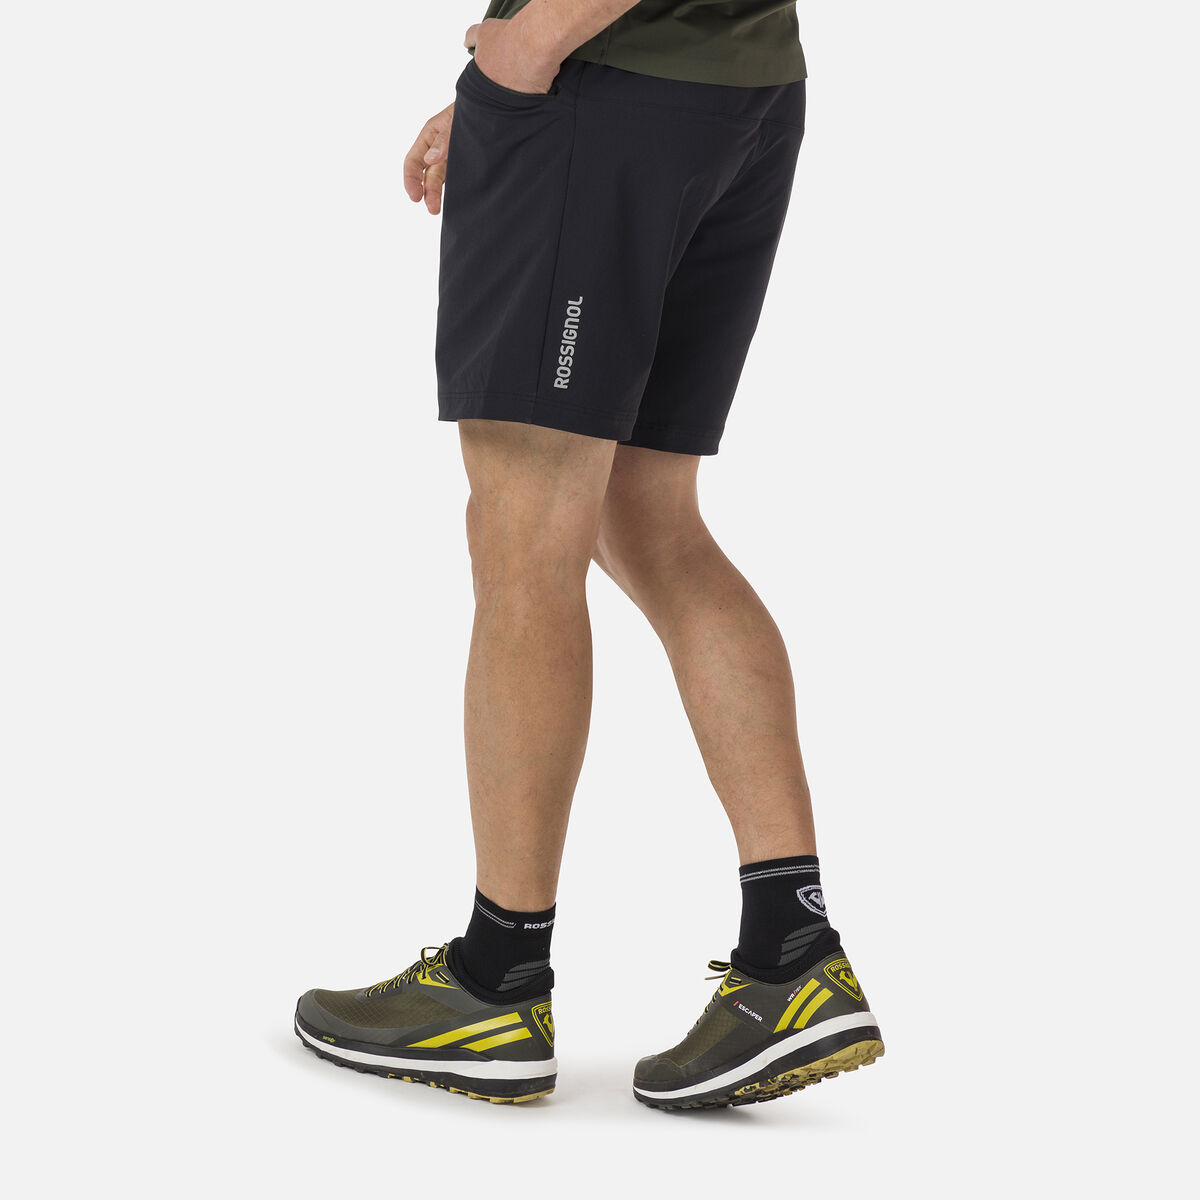 Rossignol Men's Lightweight Breathable Shorts black